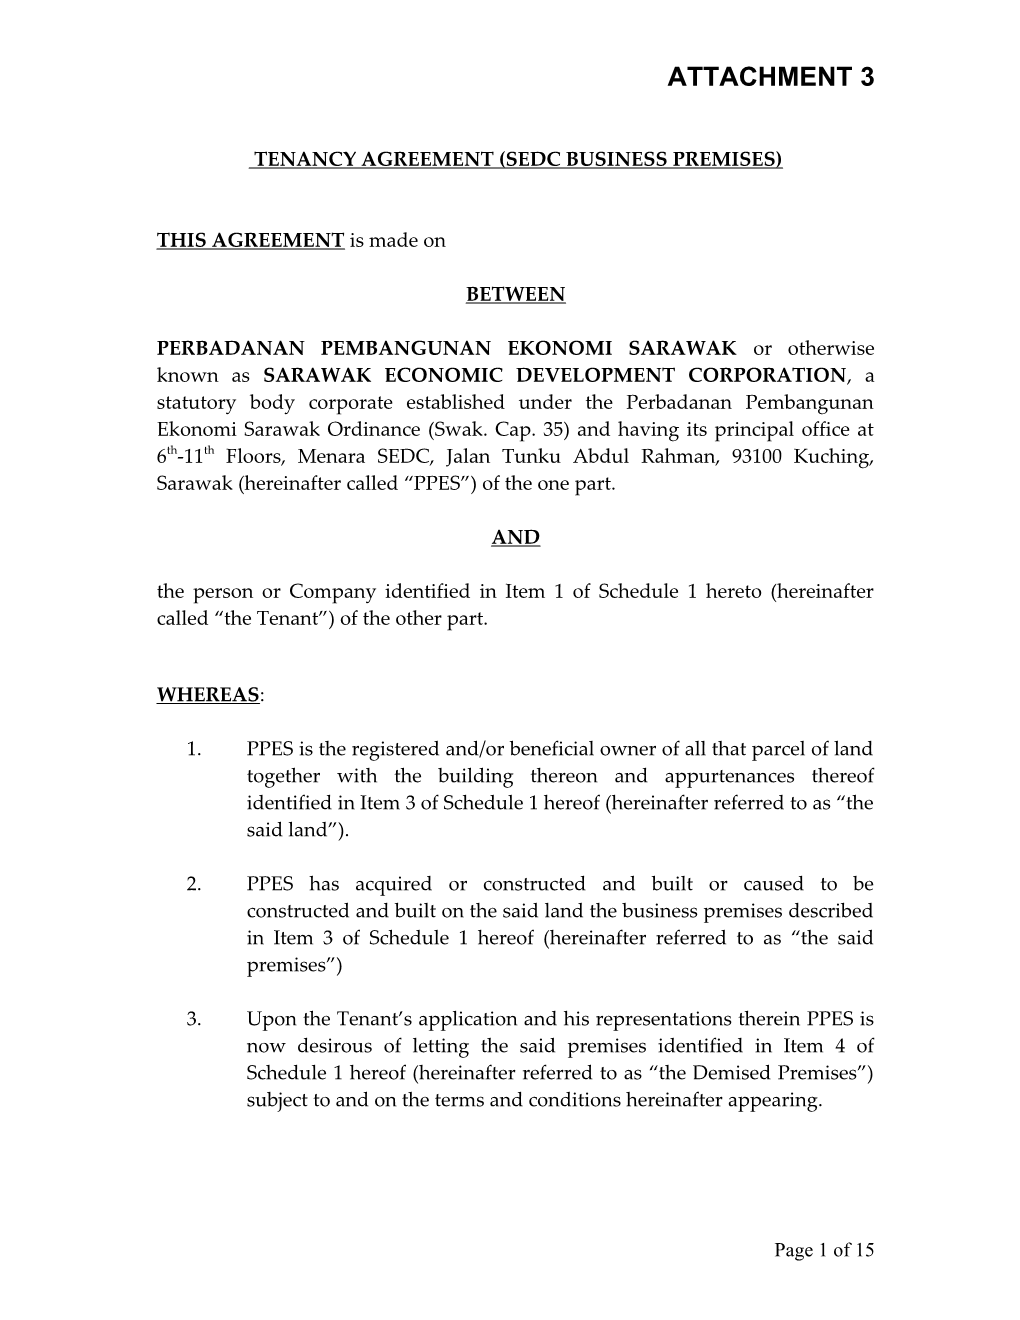 Tenancy Agreement Between Perbadanan Pembangunan Ekonomi Sarawak